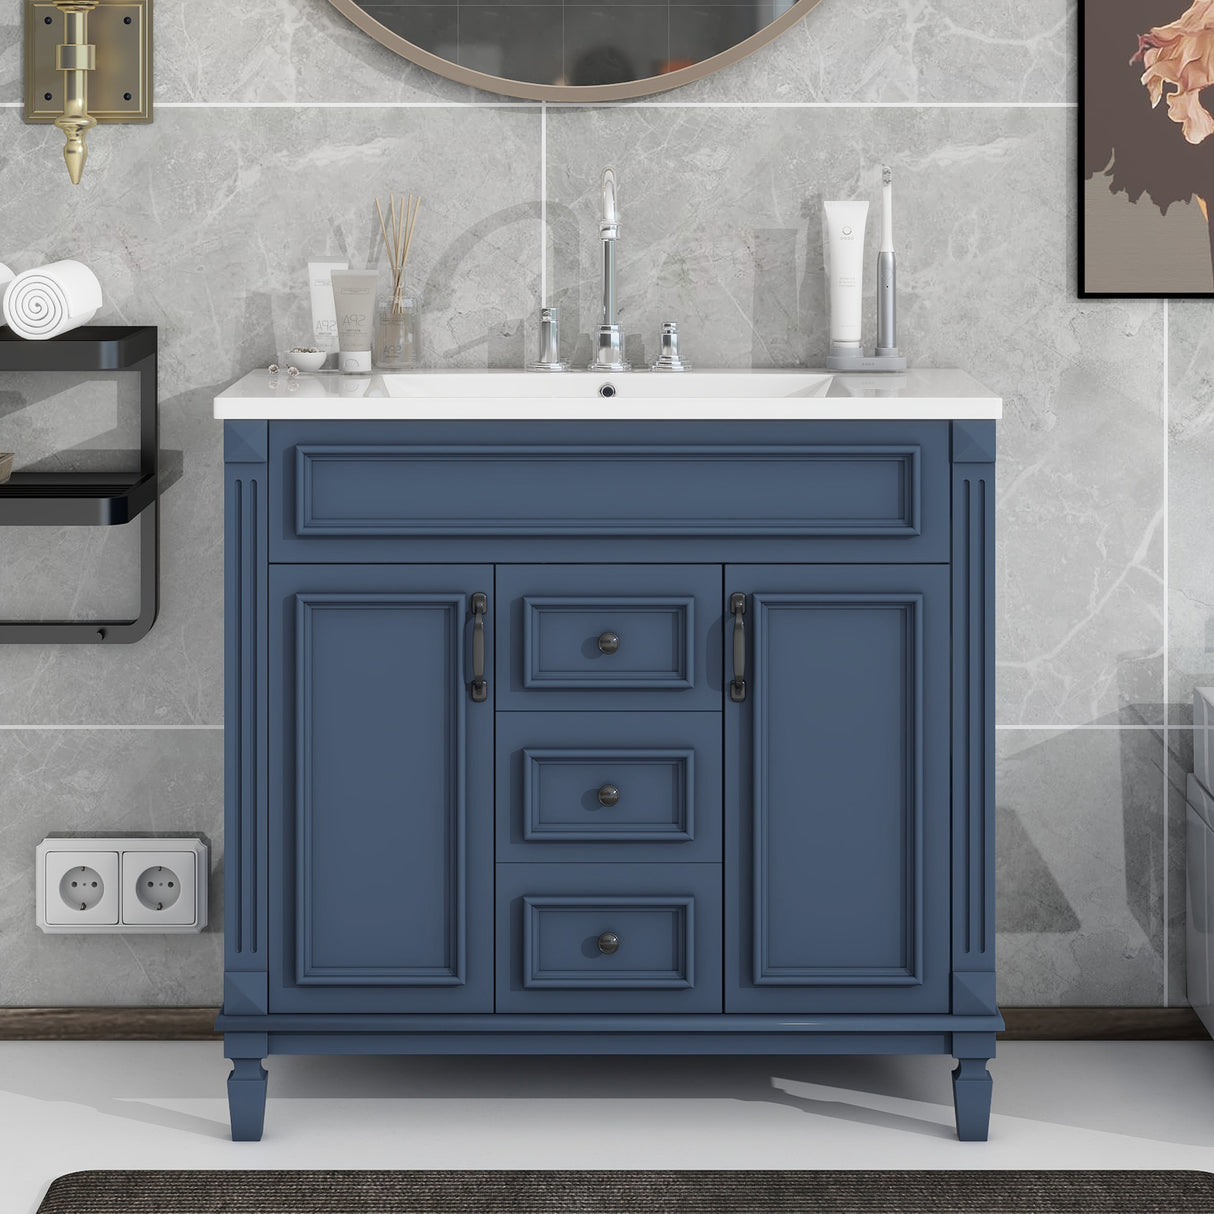 36'' Bathroom Vanity with Top Sink, Royal Blue Mirror Cabinet, Modern Bathroom Storage Cabinet with 2 Soft Closing Doors and 2 Drawers, Single Sink Bathroom Vanity